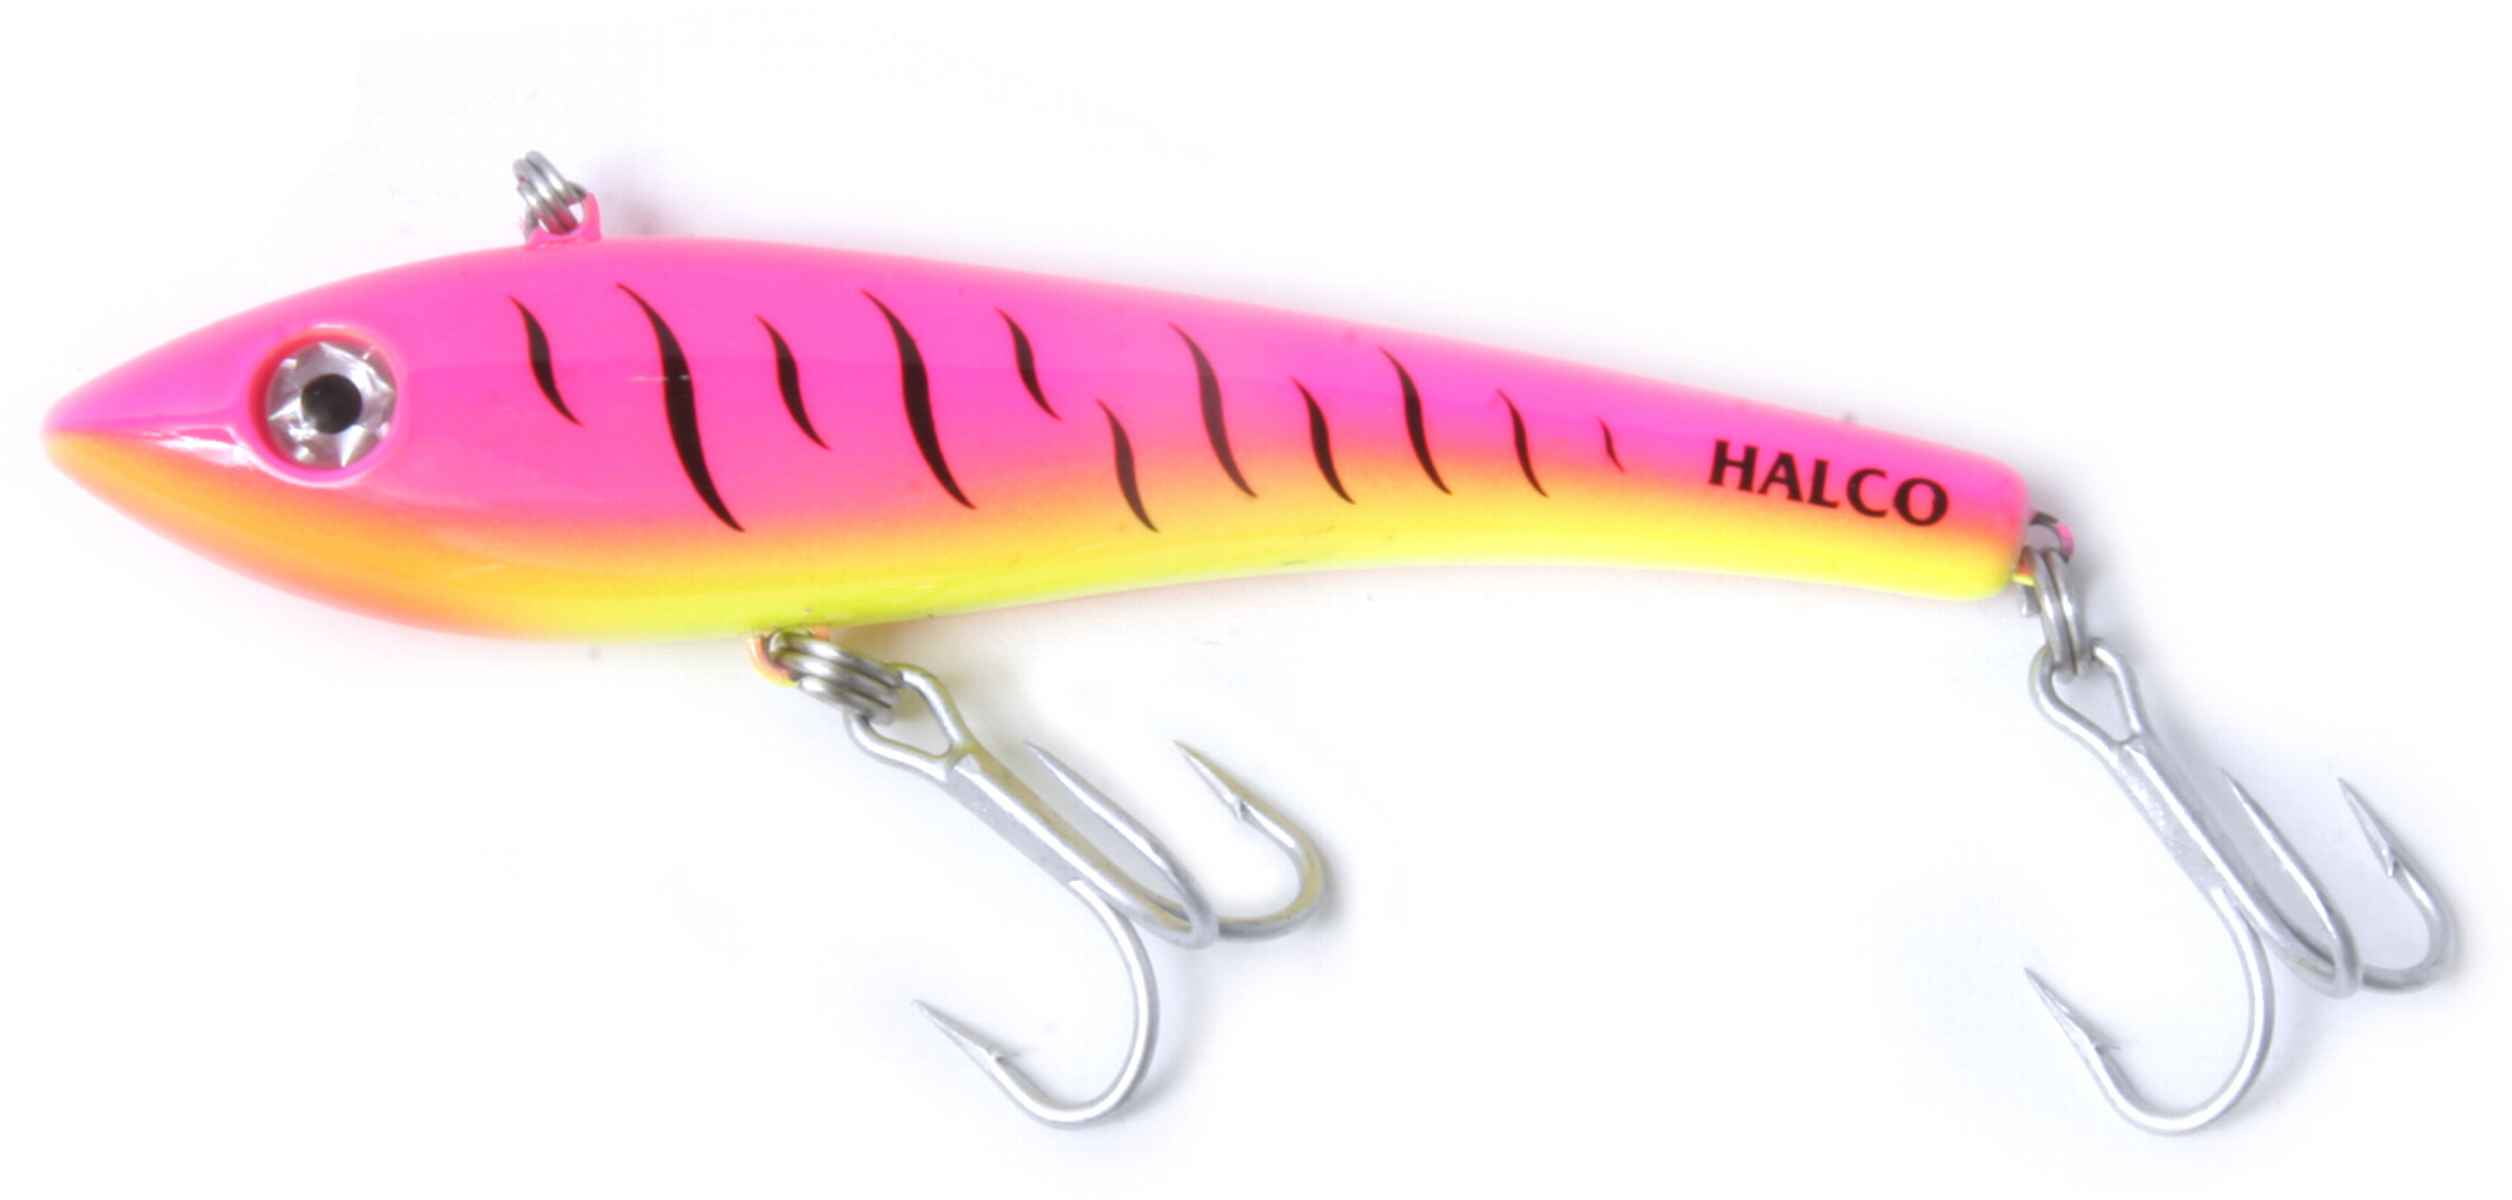 Halco Max 130 Casting/Trolling Plug, #R1 Pink Fluoro, 5 1/4, 2 7/8oz 